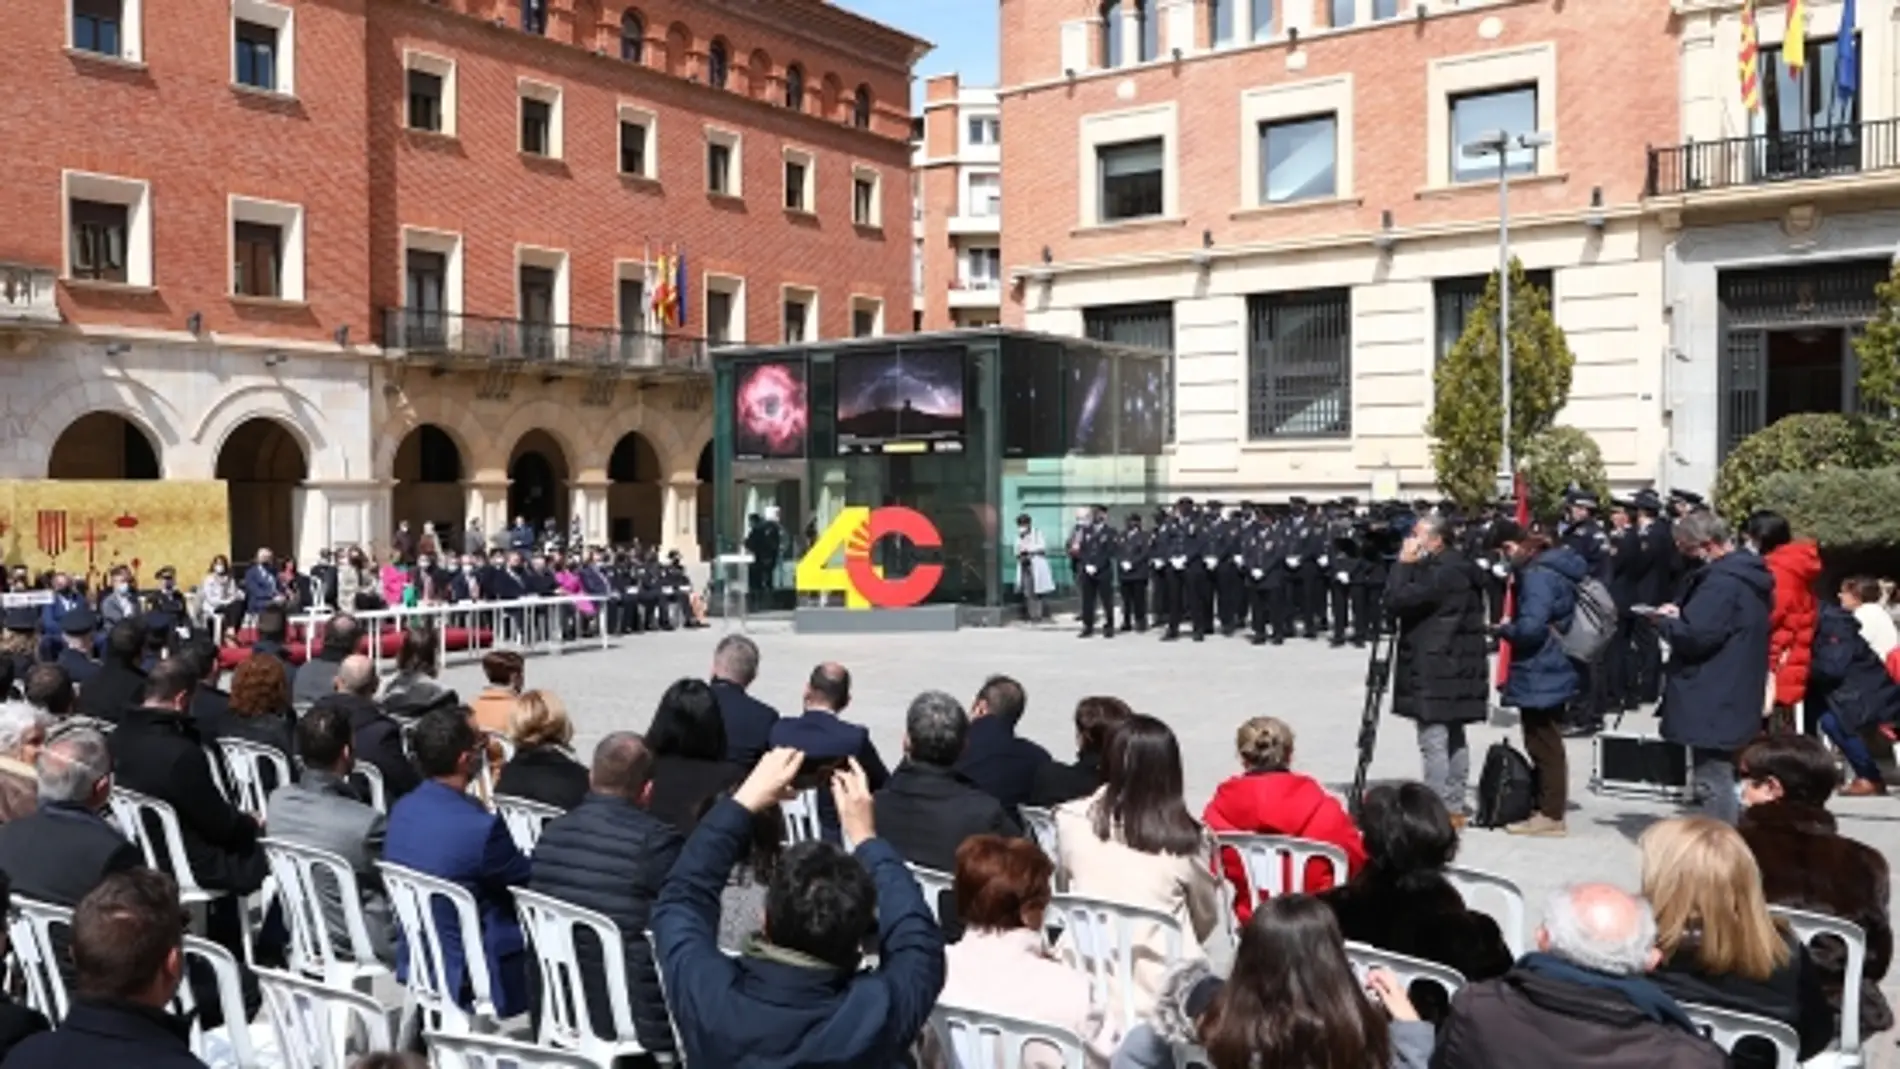 La ceremonia ha tenido lugar en la Plaza de San Juan de Teruel